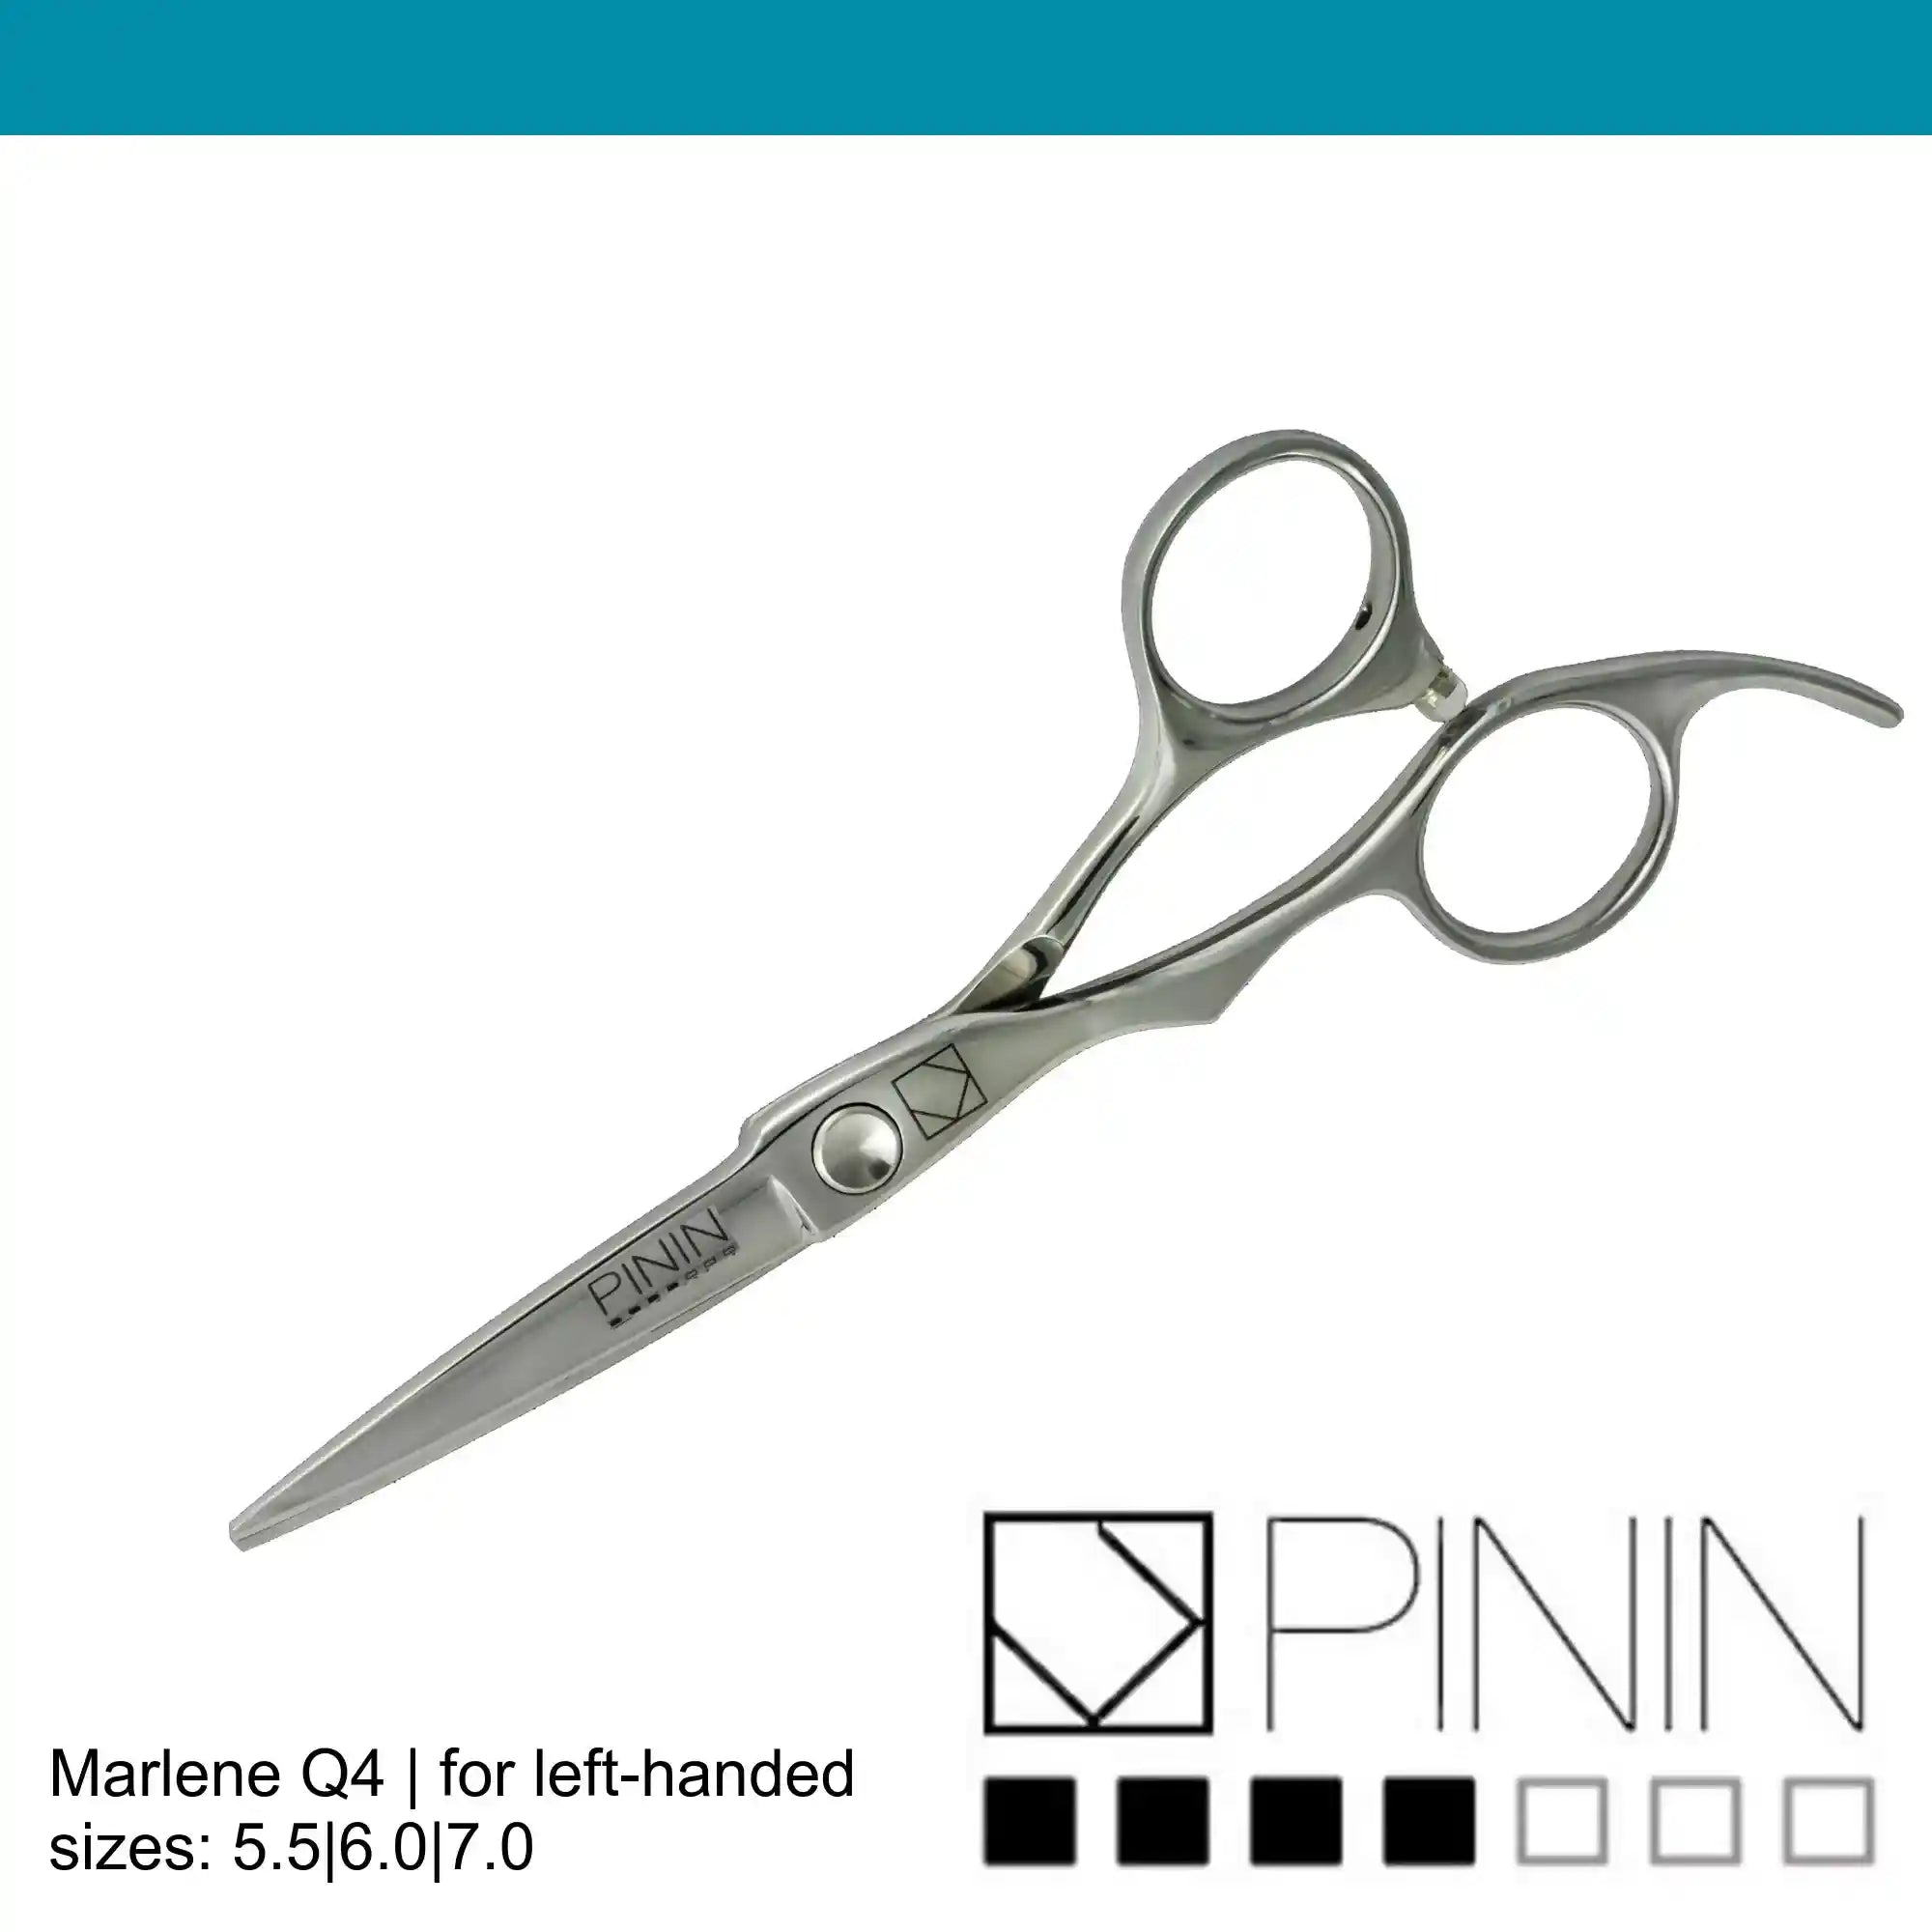 Pinin Q4 Marlene Ergonomic Left-handed Cutting Scissors